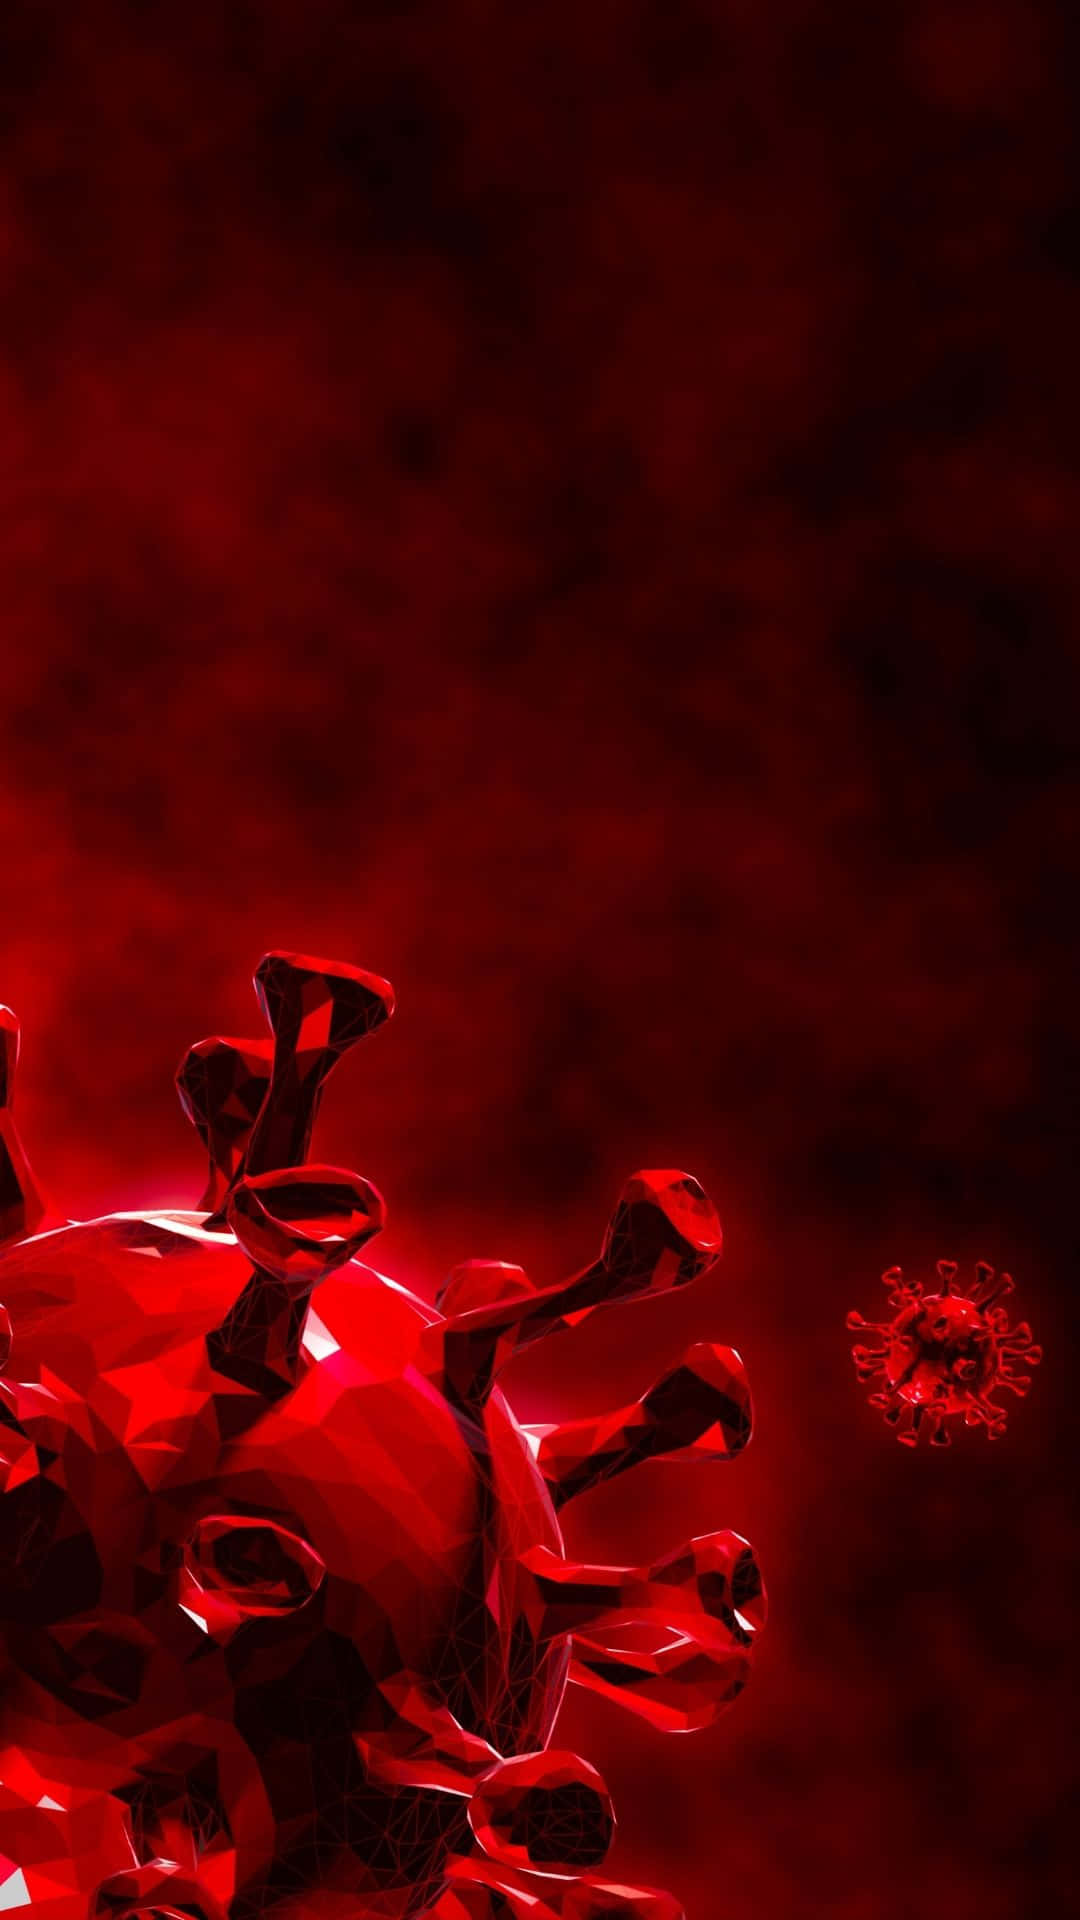 Red Virus Abstract Artwork Wallpaper